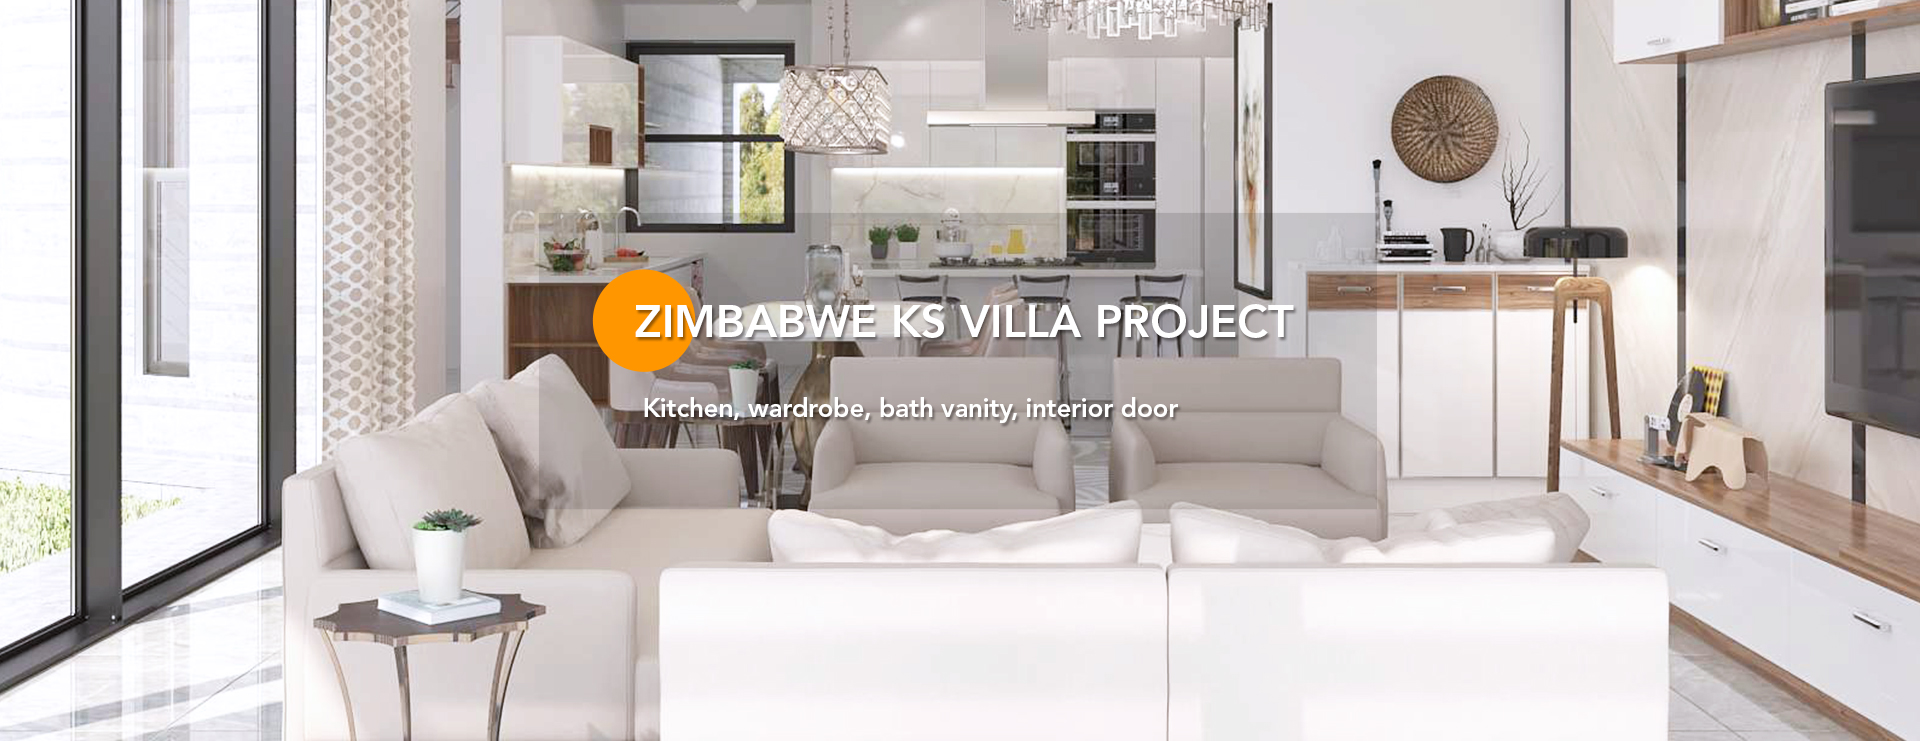 Zimbabwe-KS-Villa-Project-1128 (1)